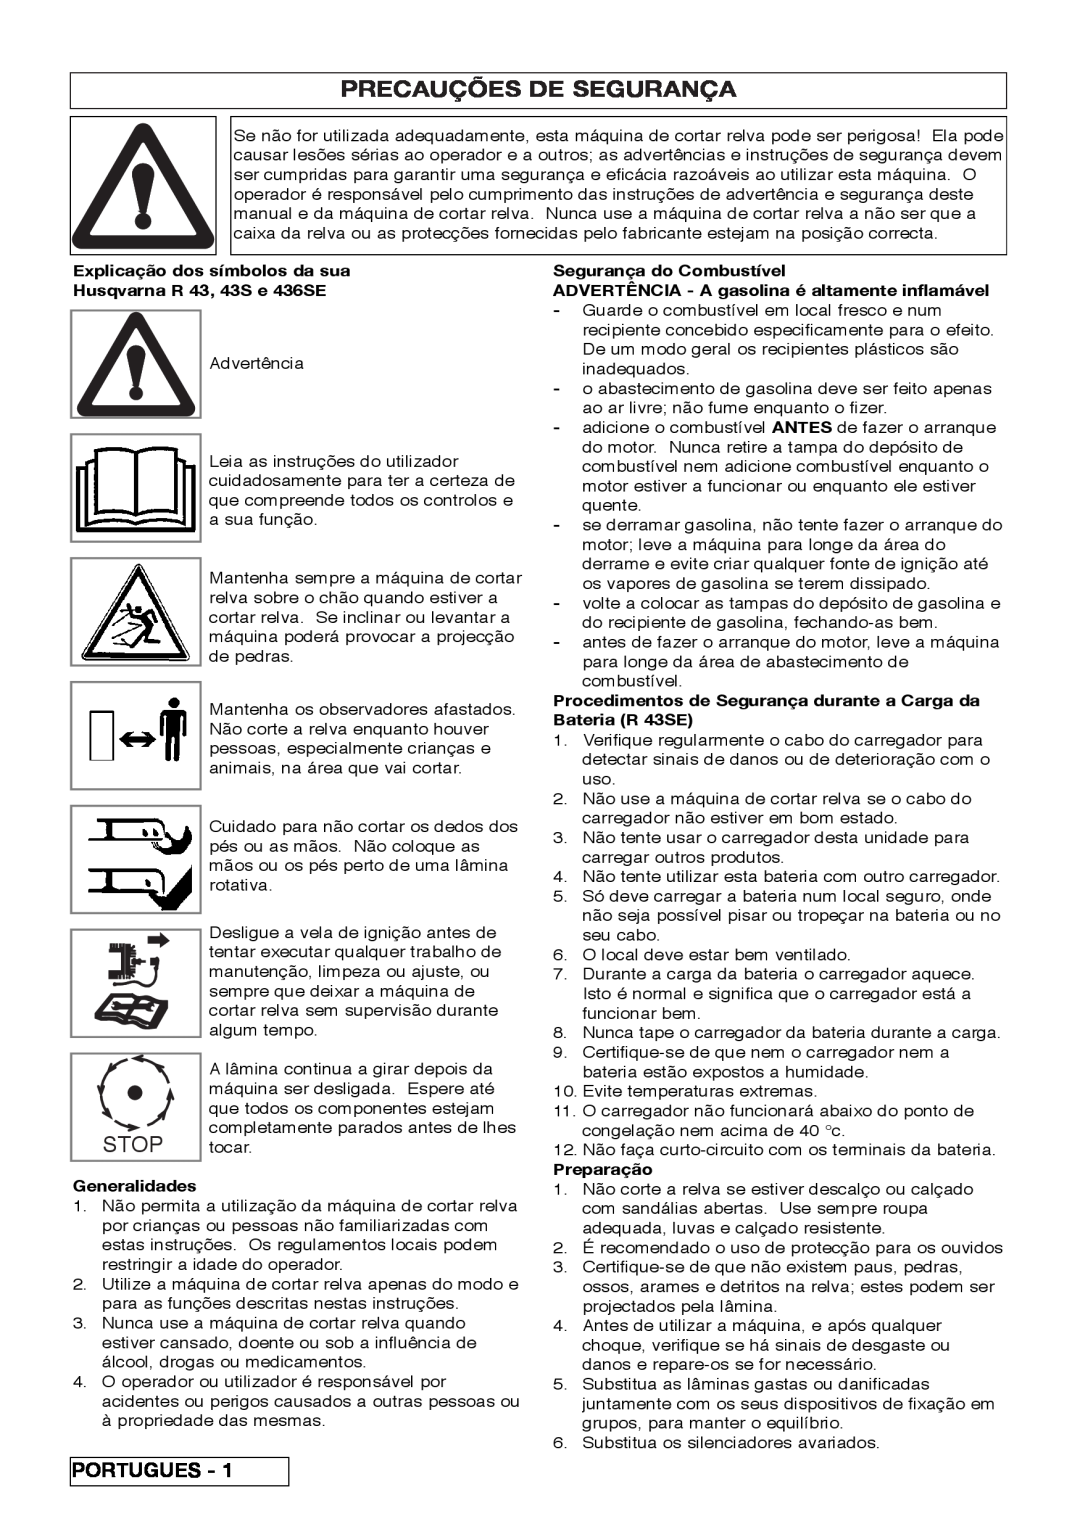 Husqvarna R 43SE manual Precauções De Segurança, Stop, Portugues 